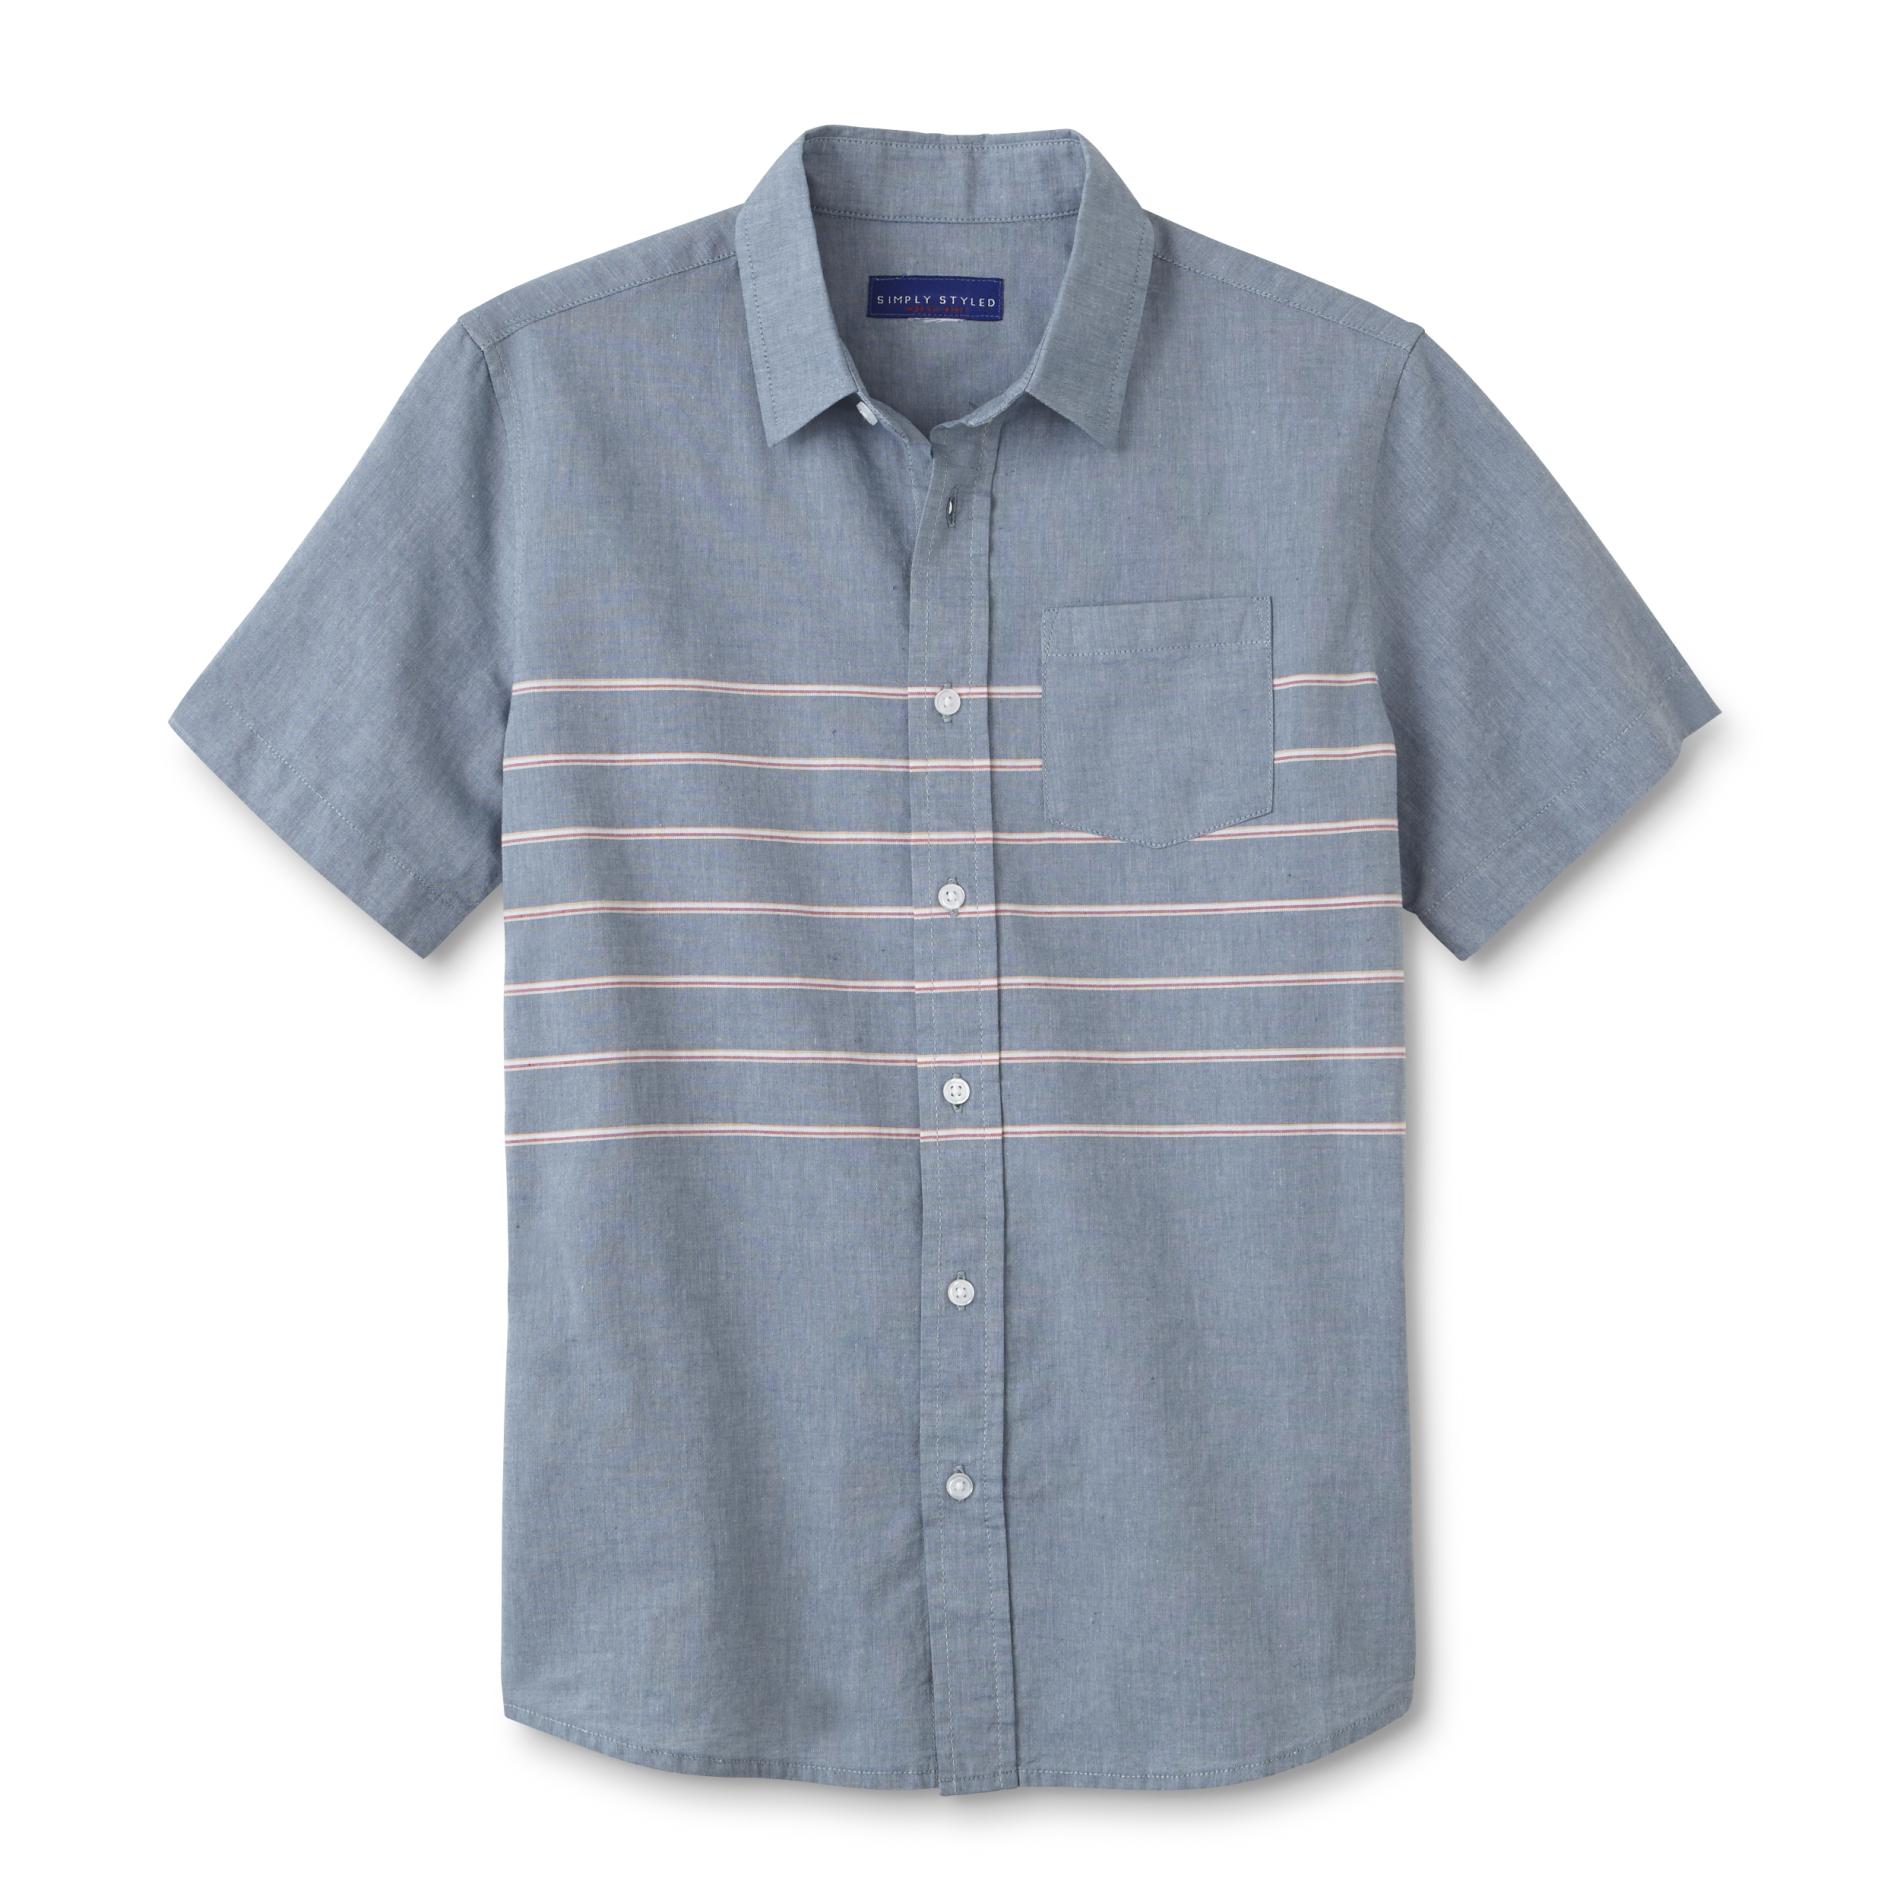 Simply Styled Boys' Short-Sleeve Shirt - Striped